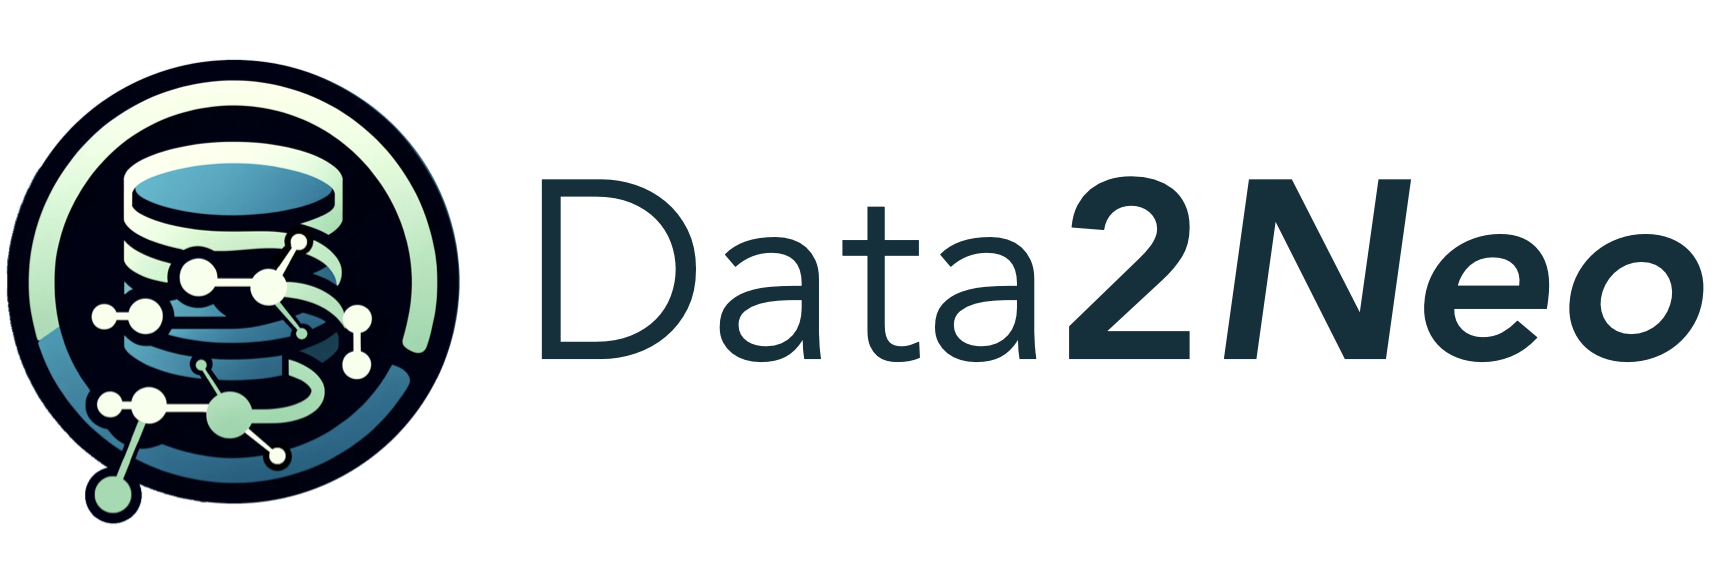 Data2Neo banner